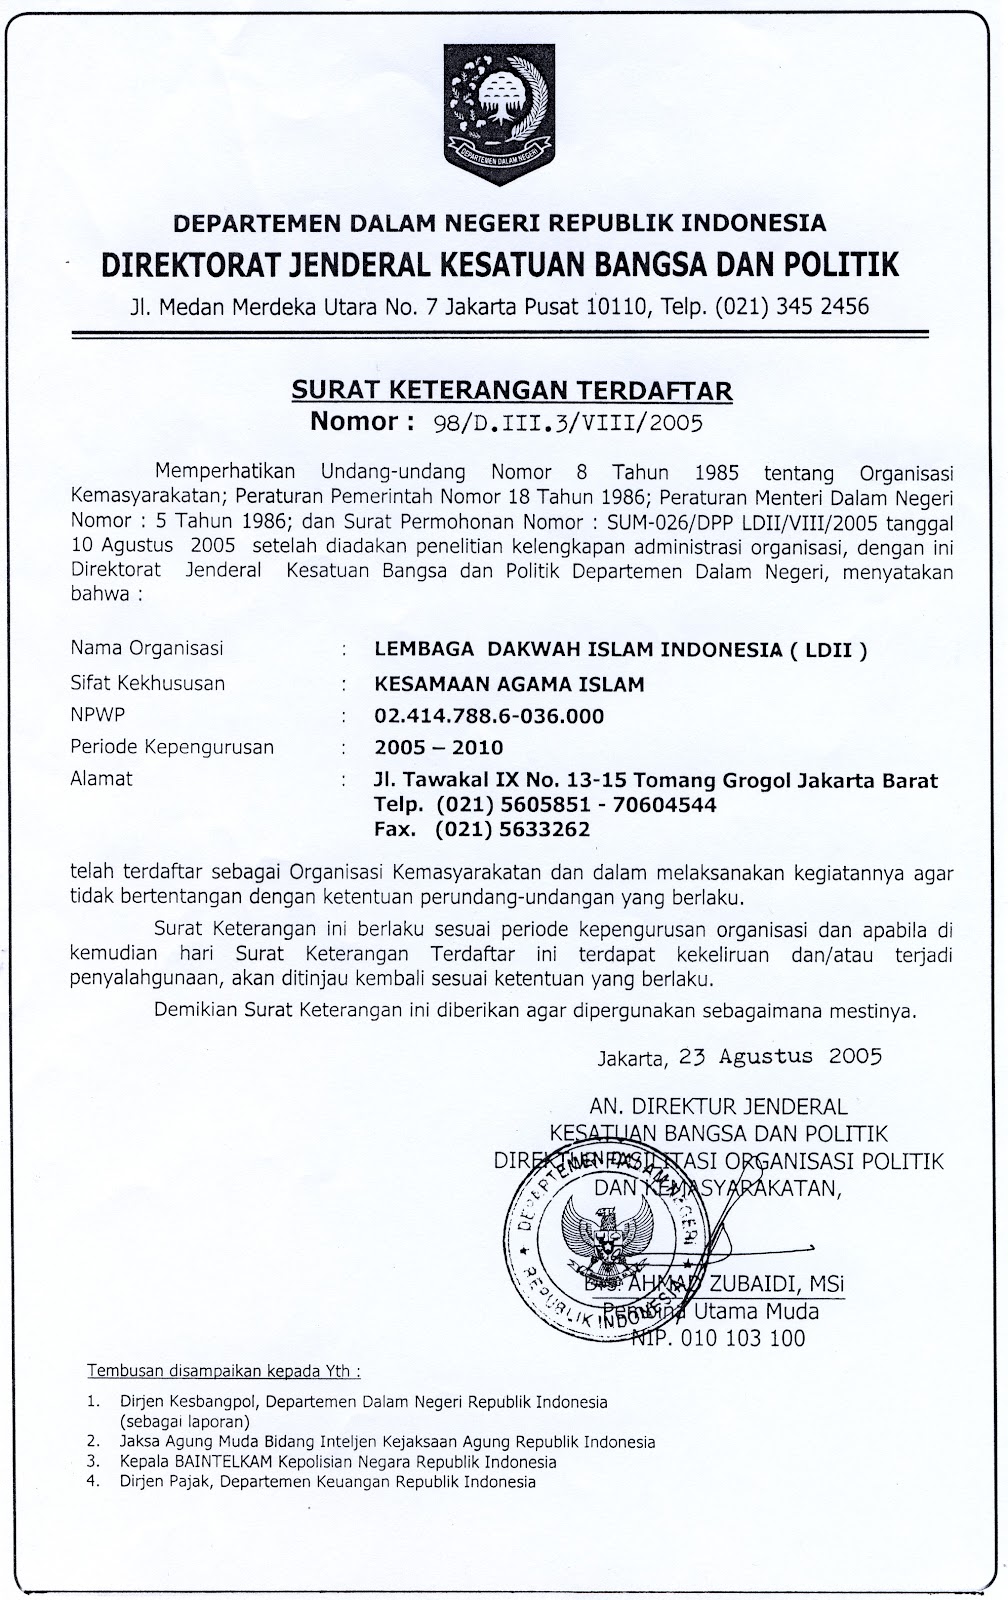 Lembaga Dakwah Islam Indonesia LDII CHANIAGO